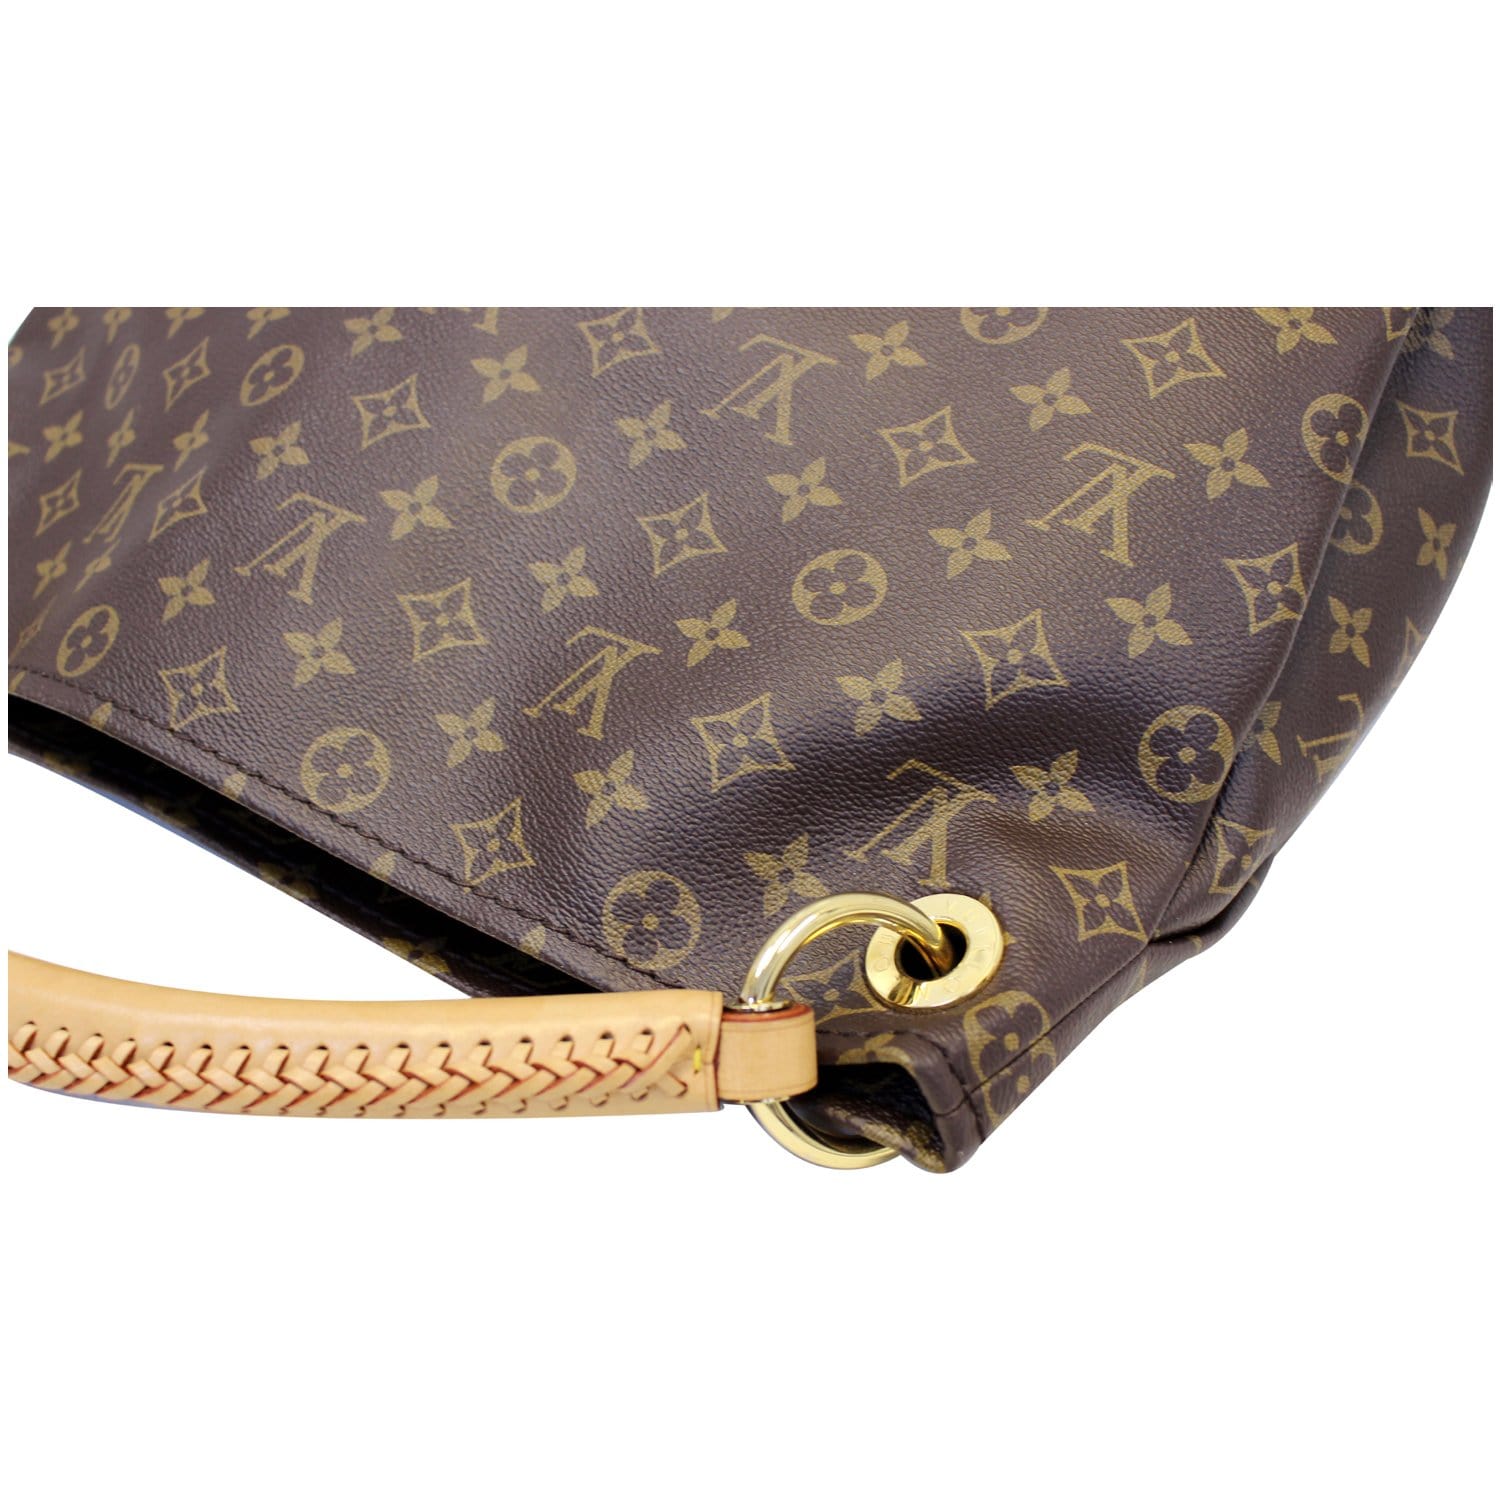 Artsy MM Monogram - Women - Handbags